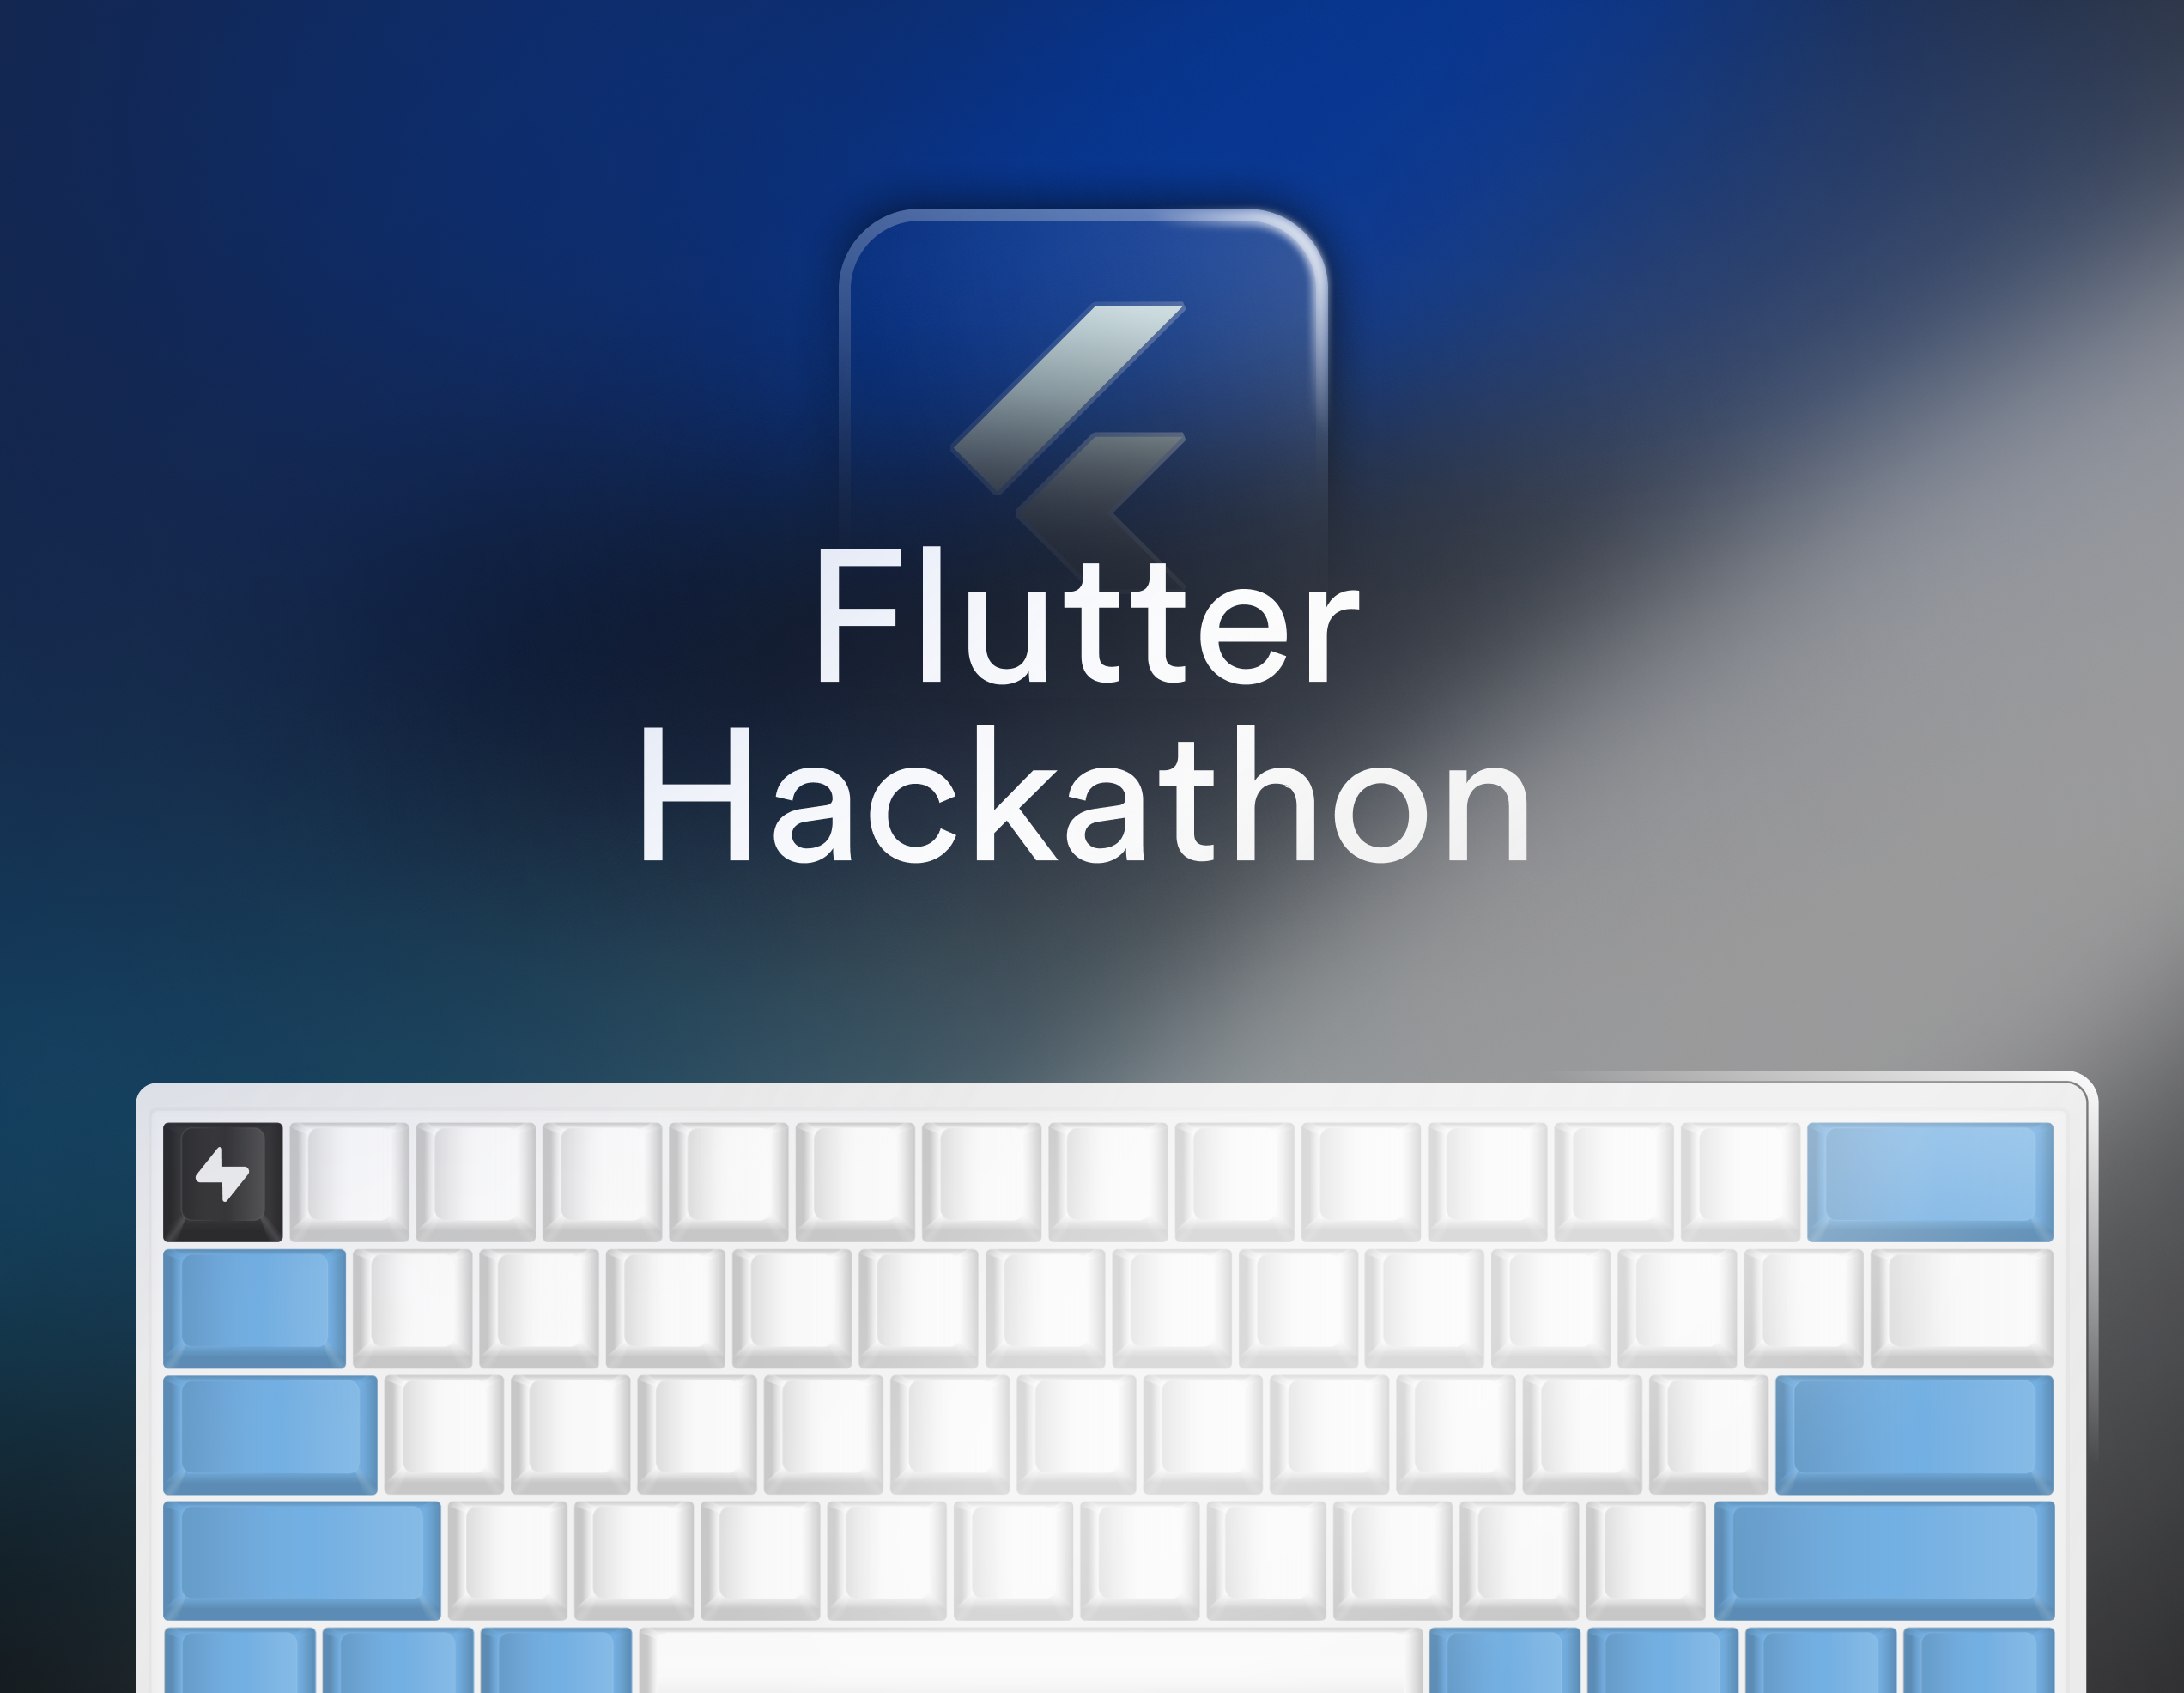 Flutter Hackathon keyboard